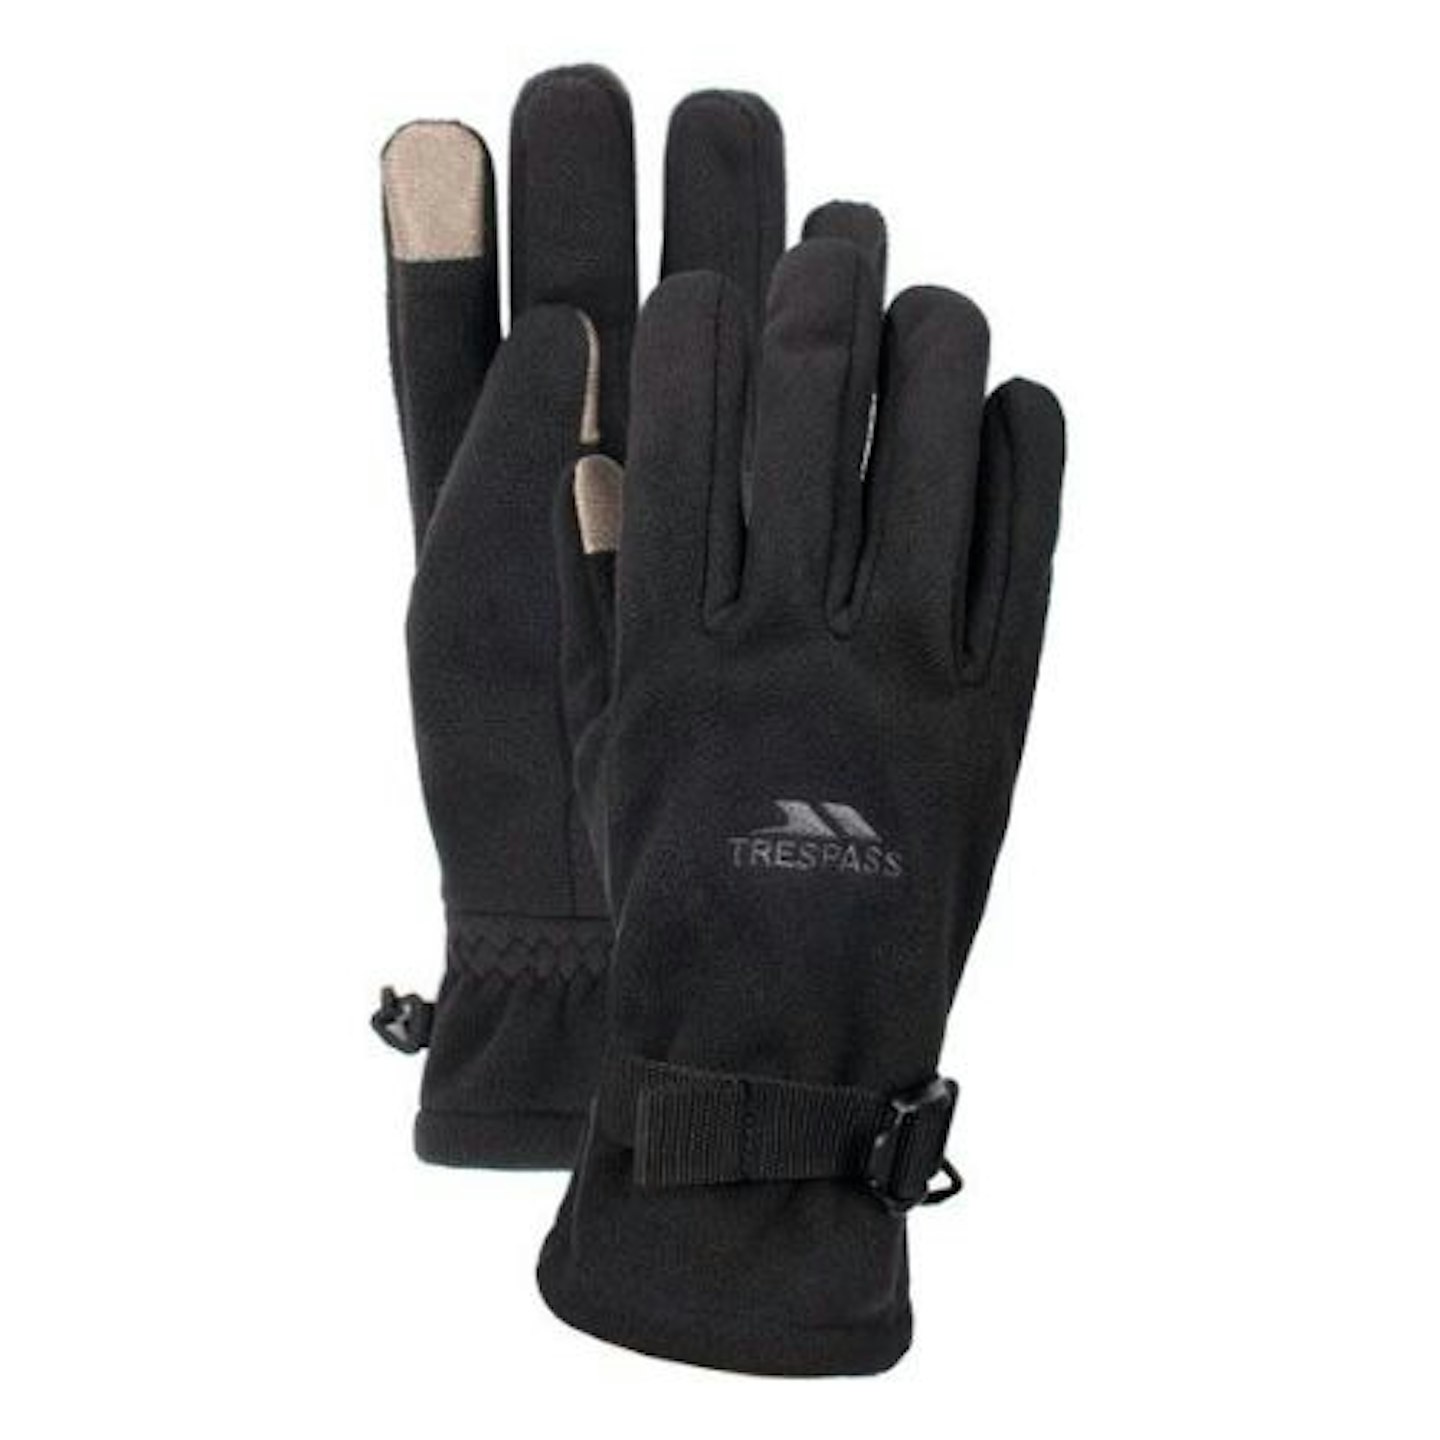 Trespass Unisex Waterproof Contact Gloves